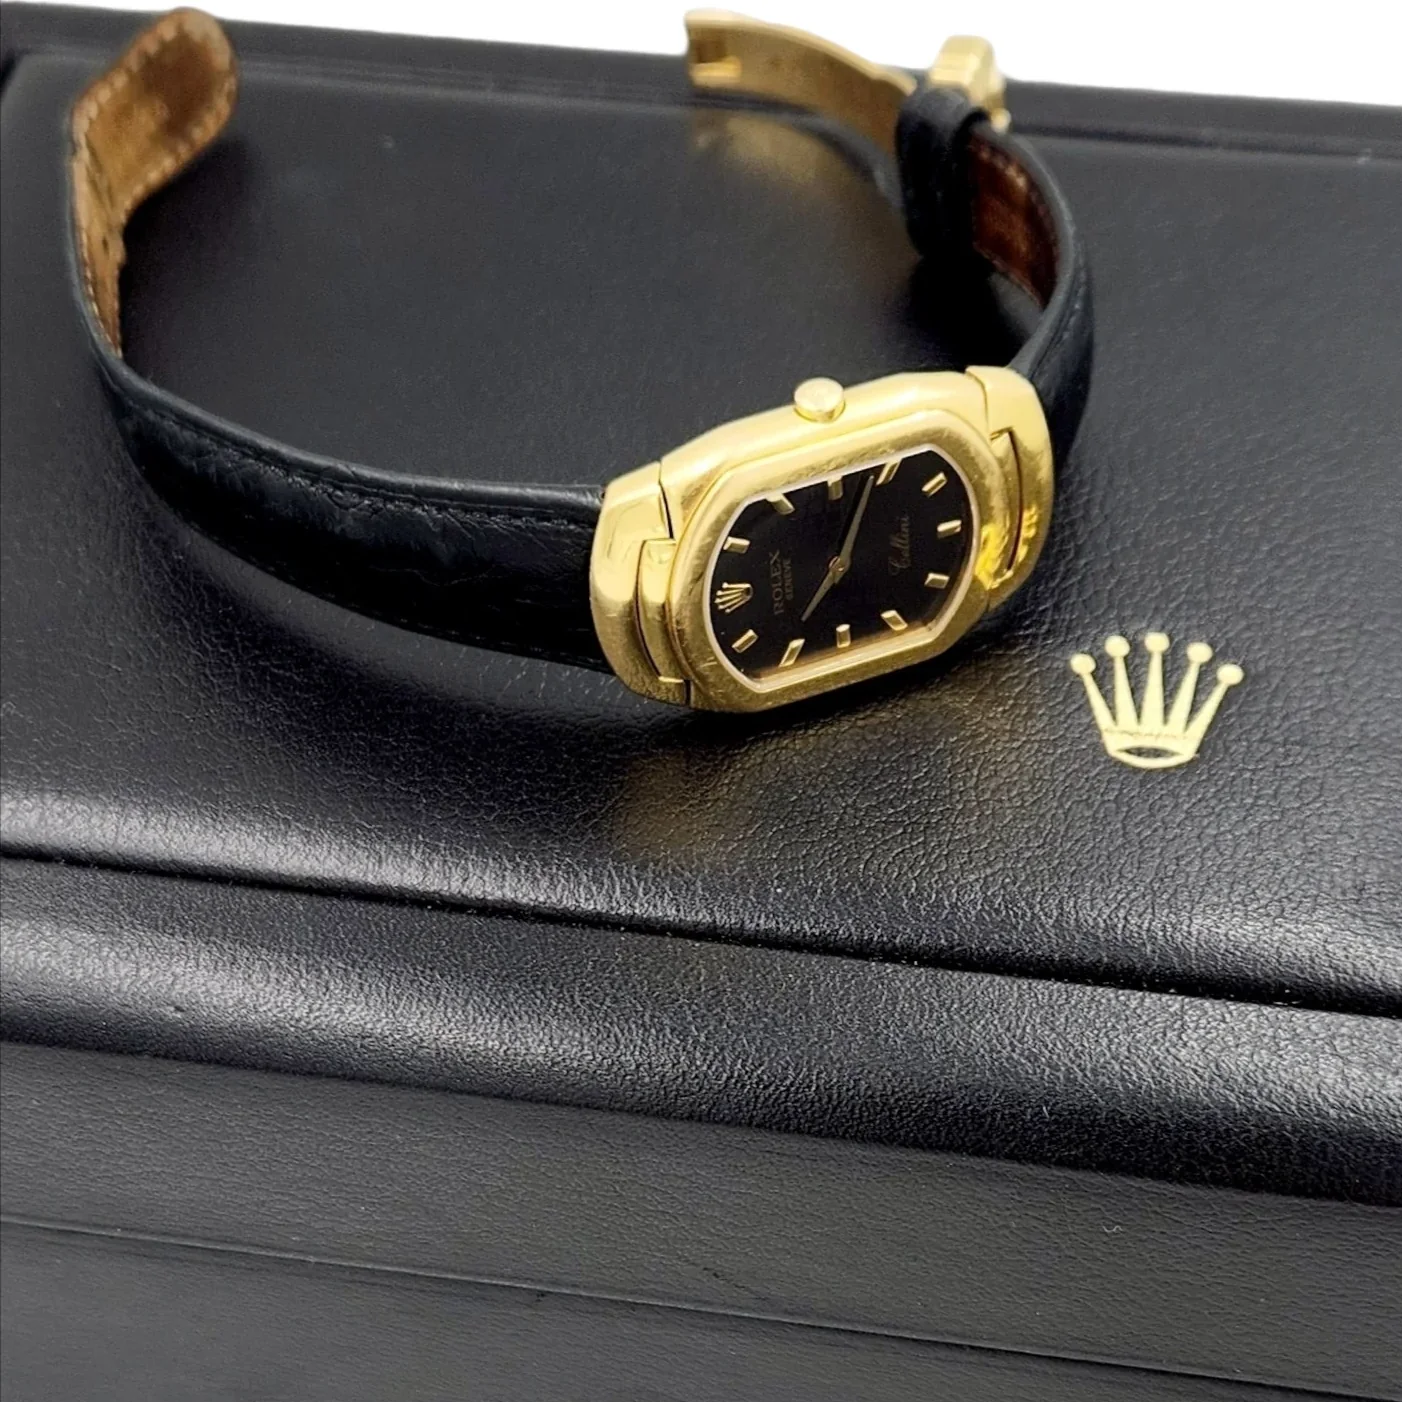 Men's Rolex Cellini Vintage 18K Yellow Gold Wristwatch w/ Black Dial & Black Leather Strap. (Pre-Owned 6633)